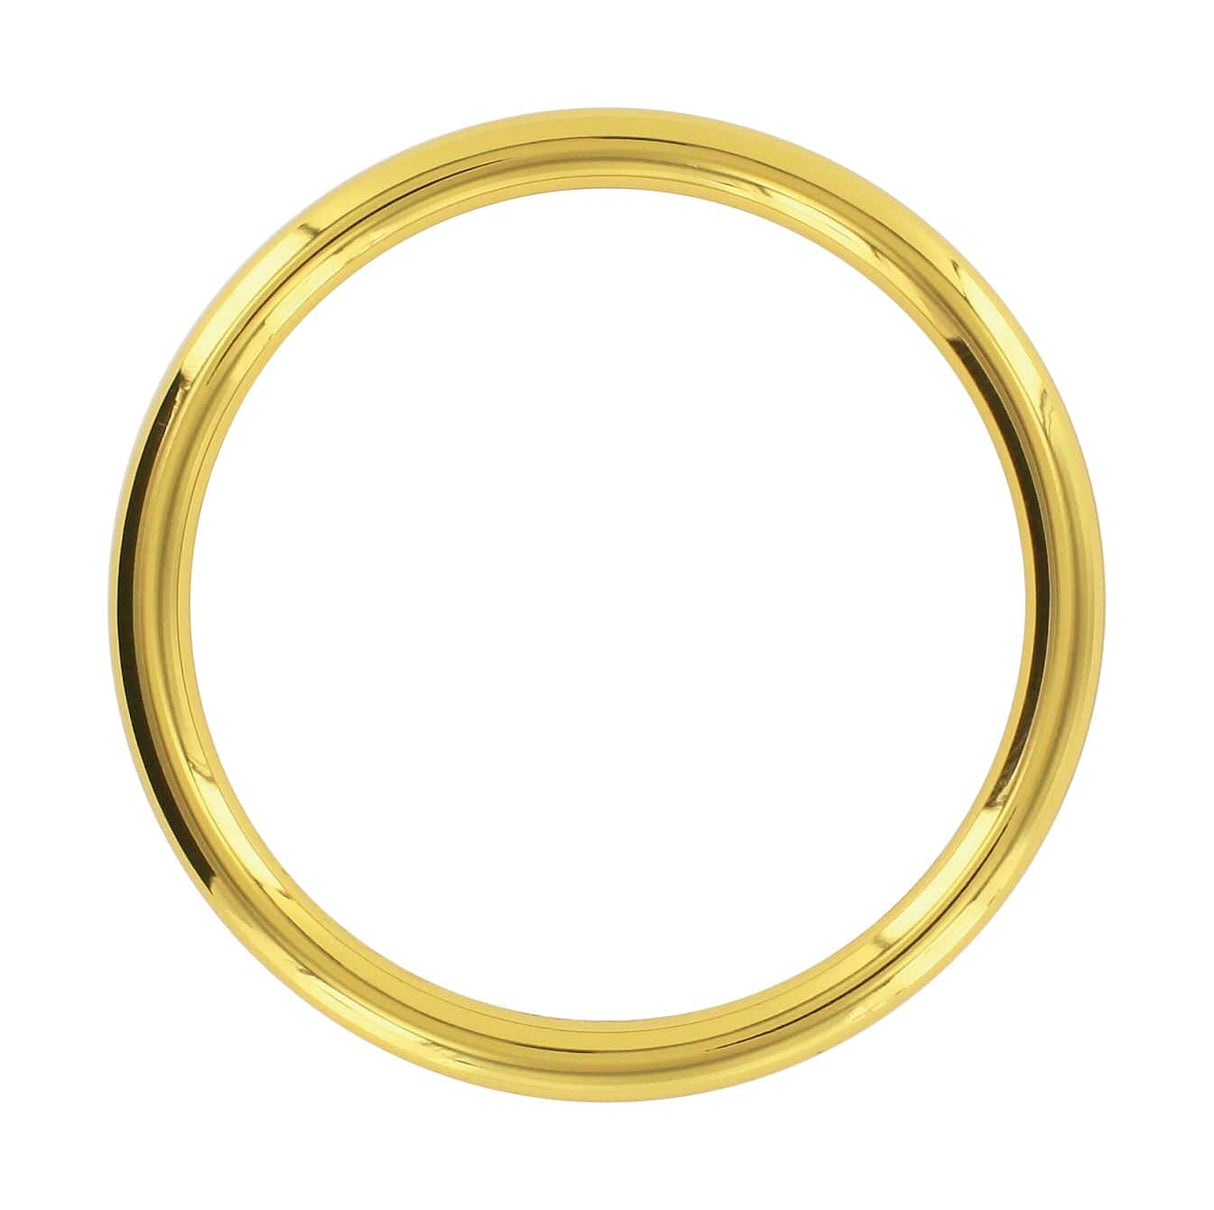 Ohio Travel Bag Rings & Slides 2" Shiny Gold, Cast Round Ring, Zinc Alloy, #P-2762-GOLD P-2762-GOLD